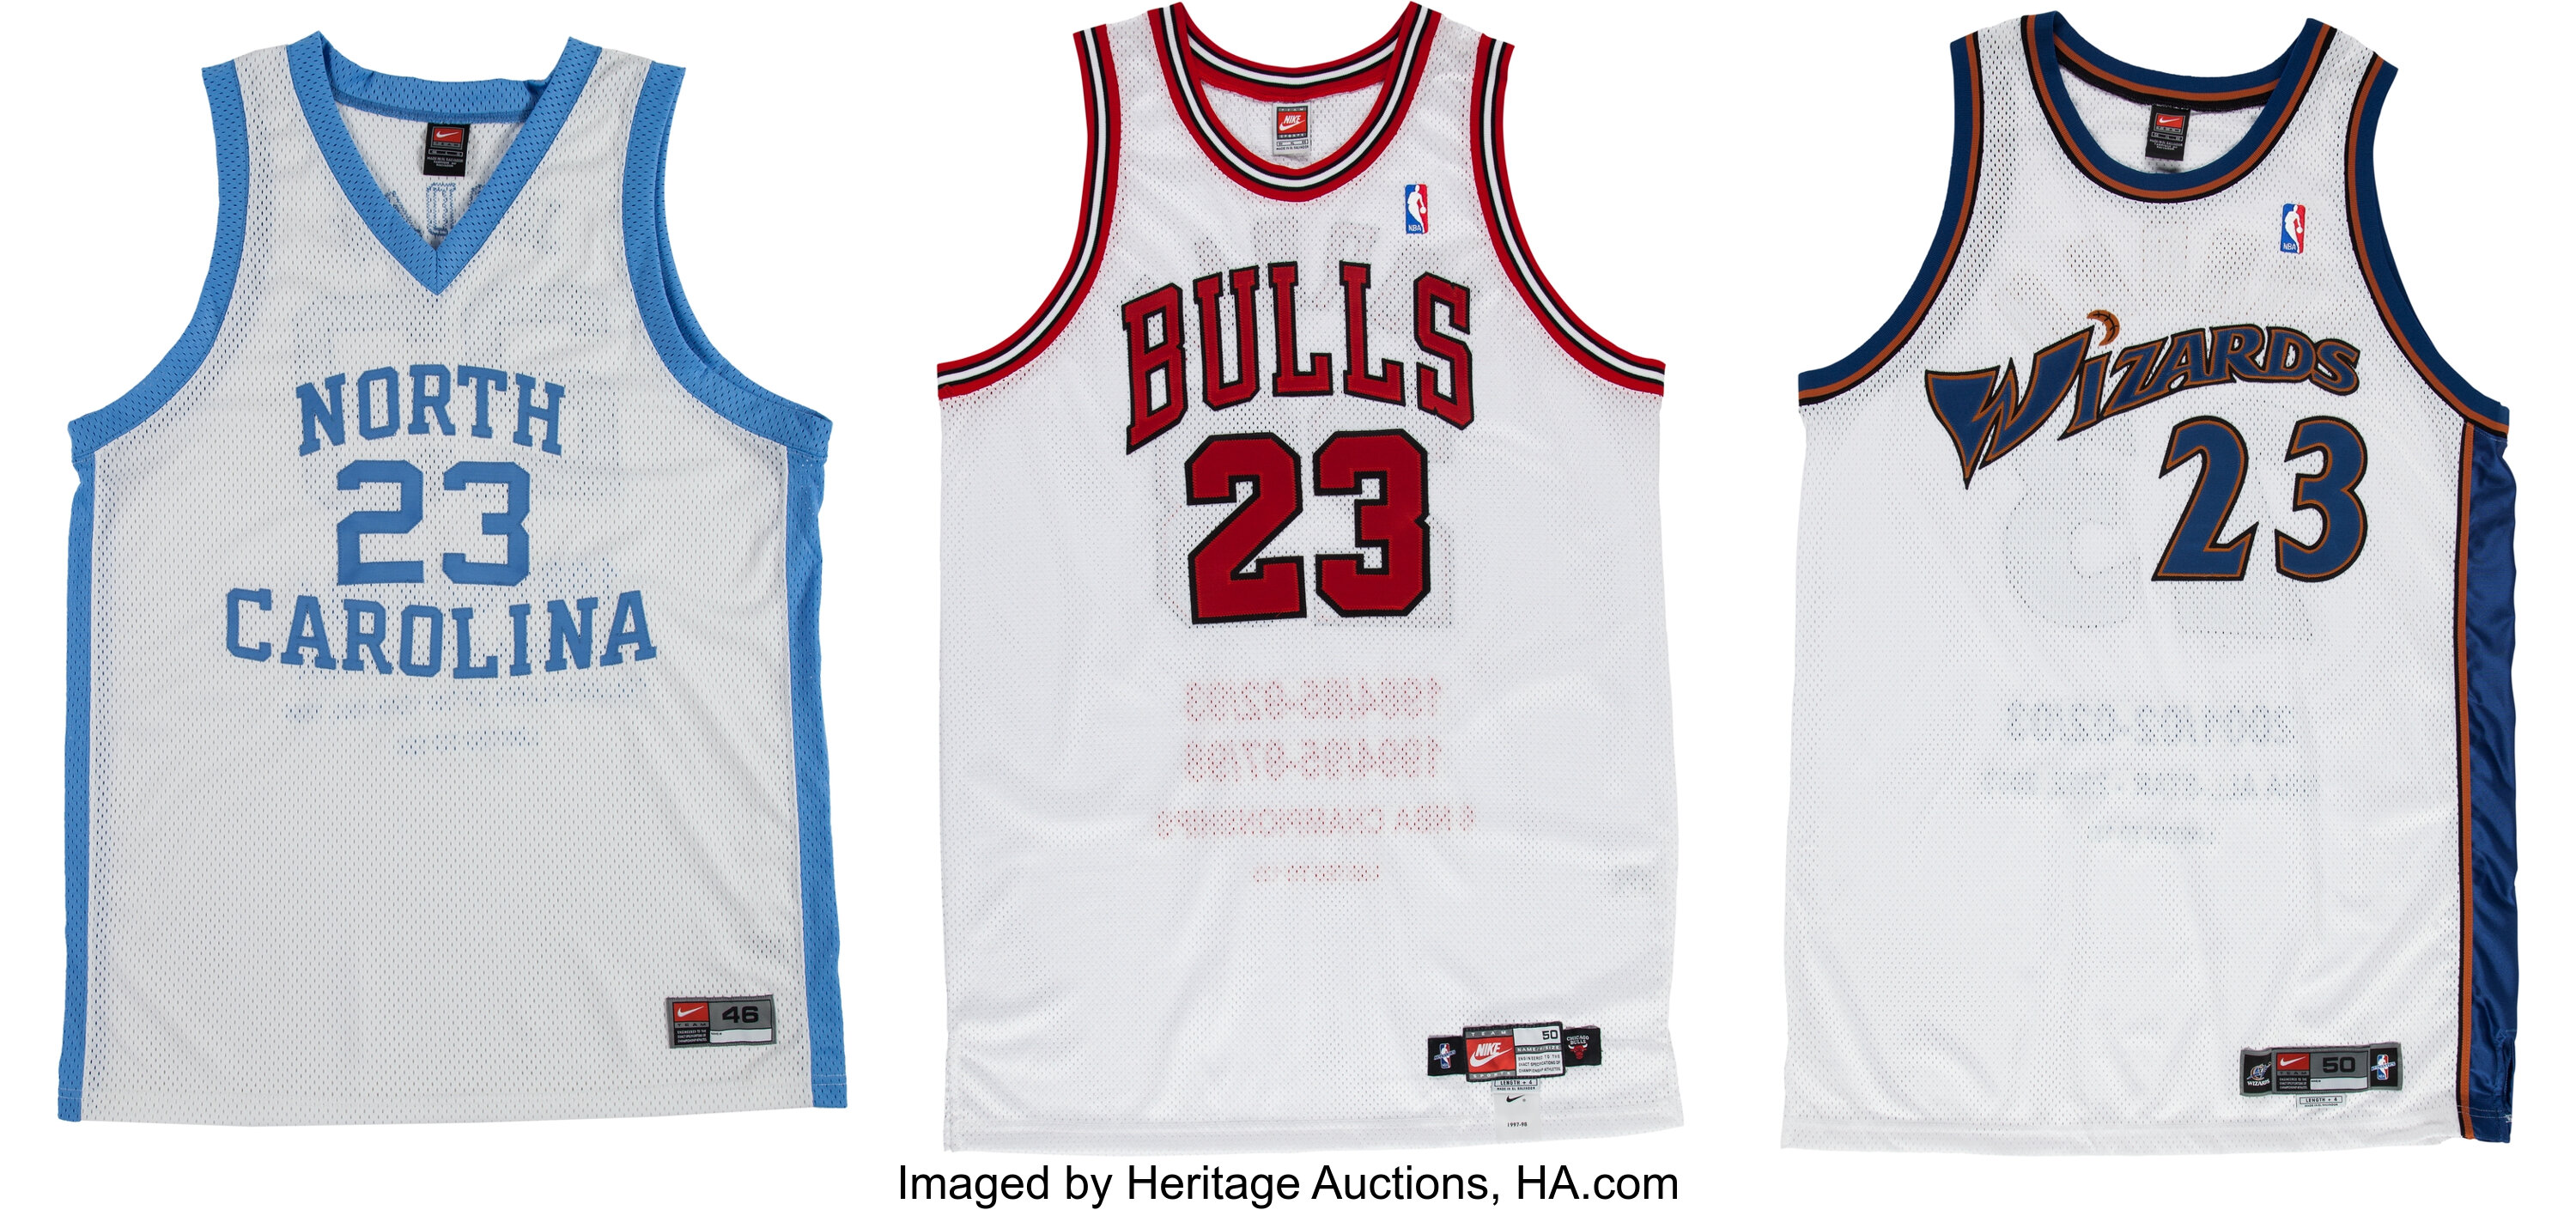 Nike Washington Wizards Retro Michael Jordan jersey